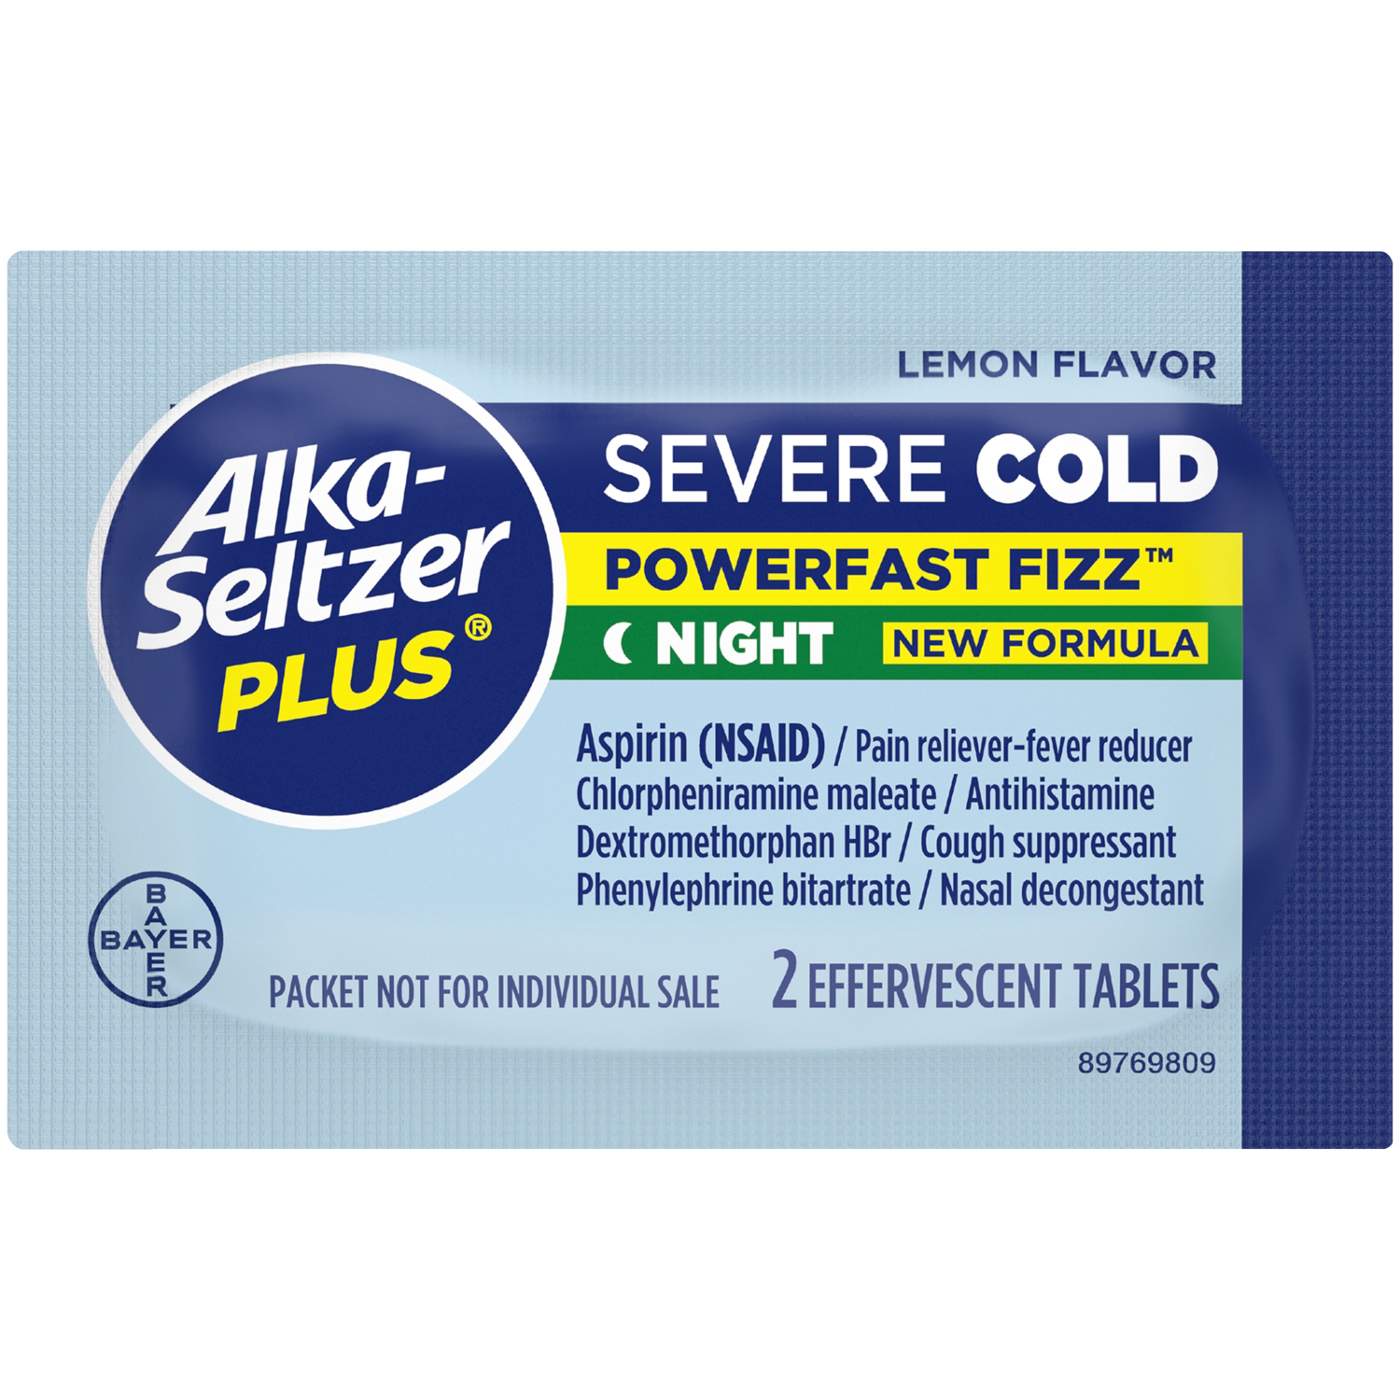 Alka-Seltzer Plus Severe Cold Powerfast Fizz Night Tablets - Lemon; image 3 of 8